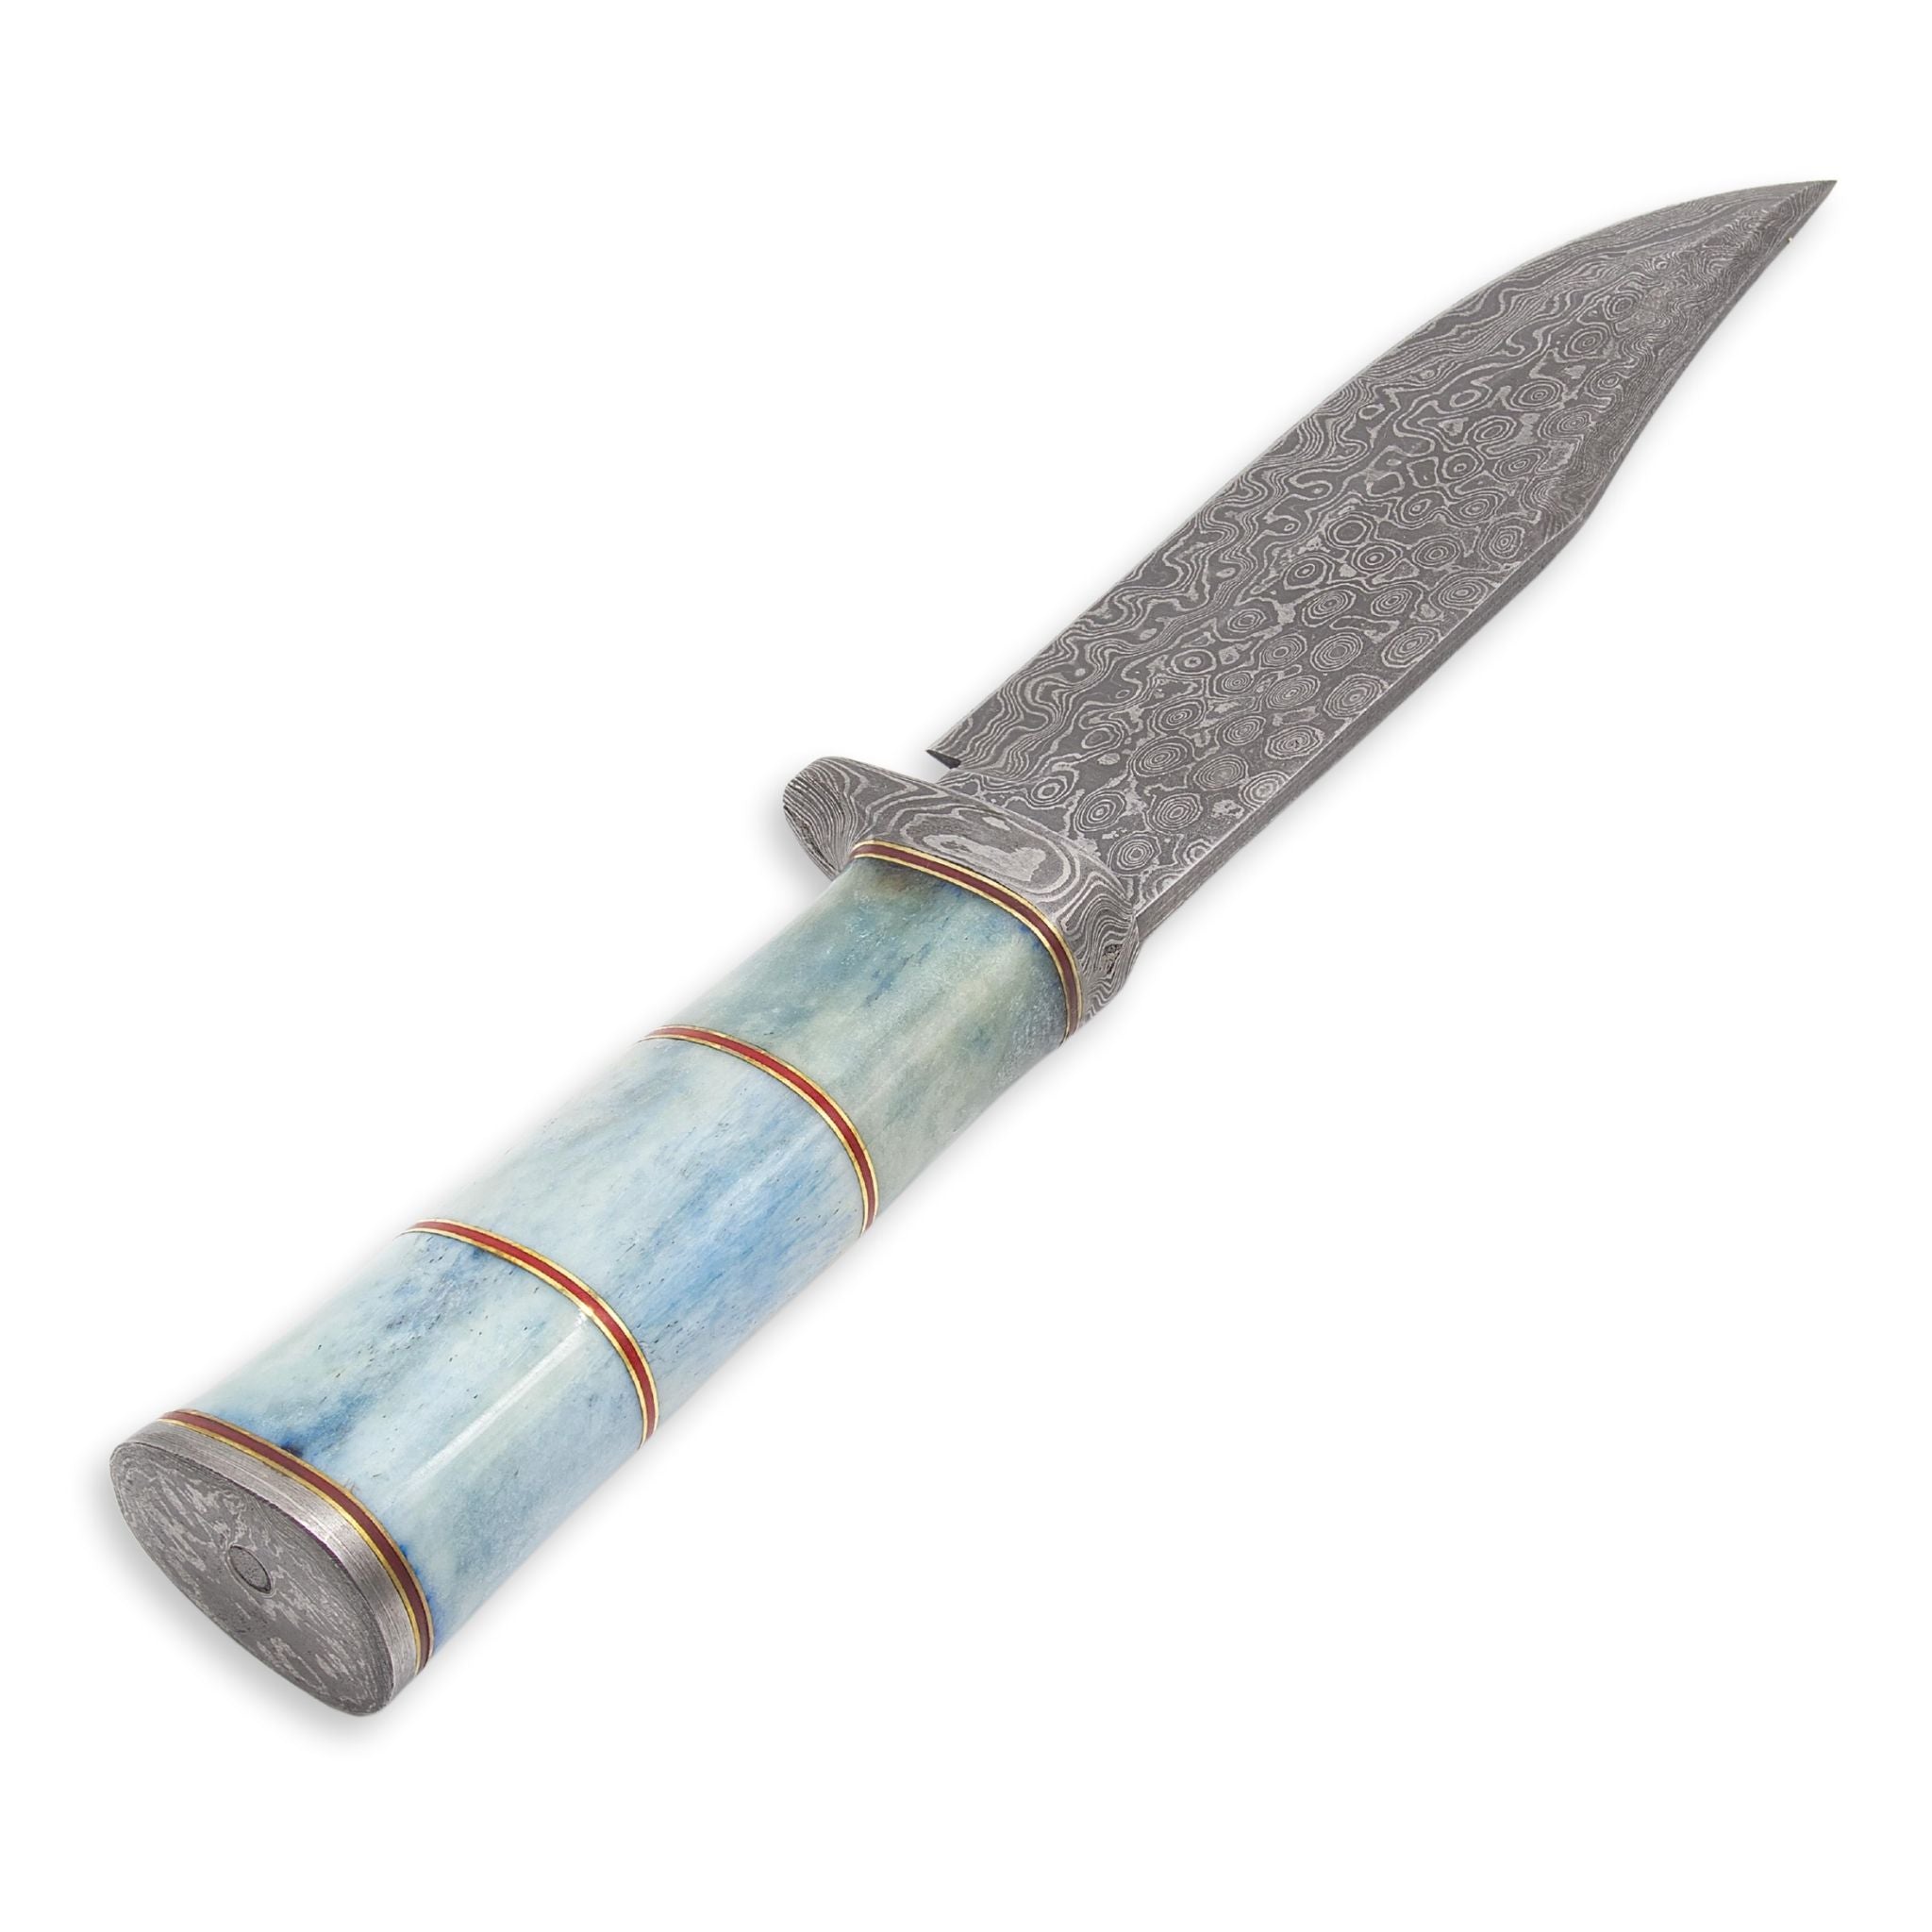 Maven Maxim IV, Handmade Hunting Knife